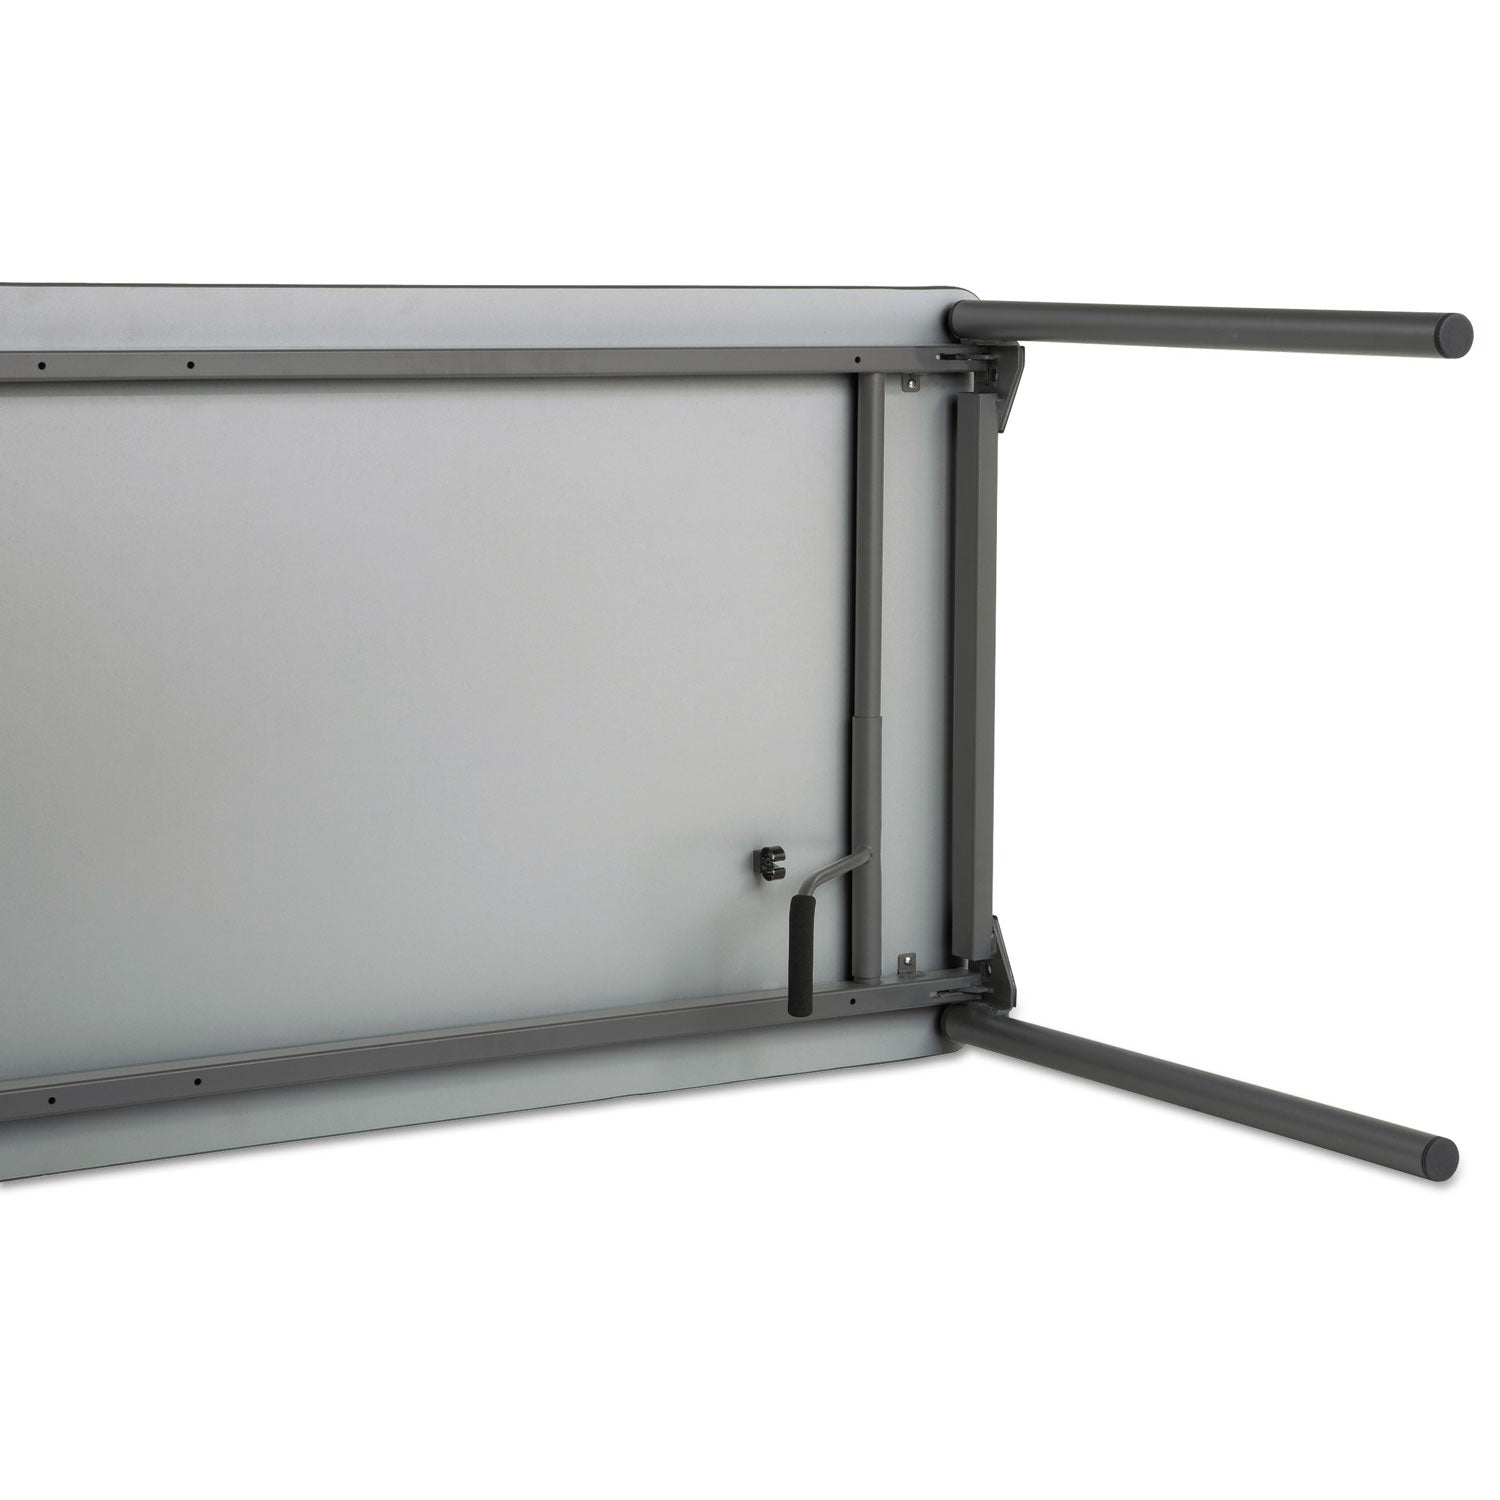 Maxx Legroom Wood Folding Table, Rectangular, 72" x 30" x 29.5", Walnut/Charcoal - 